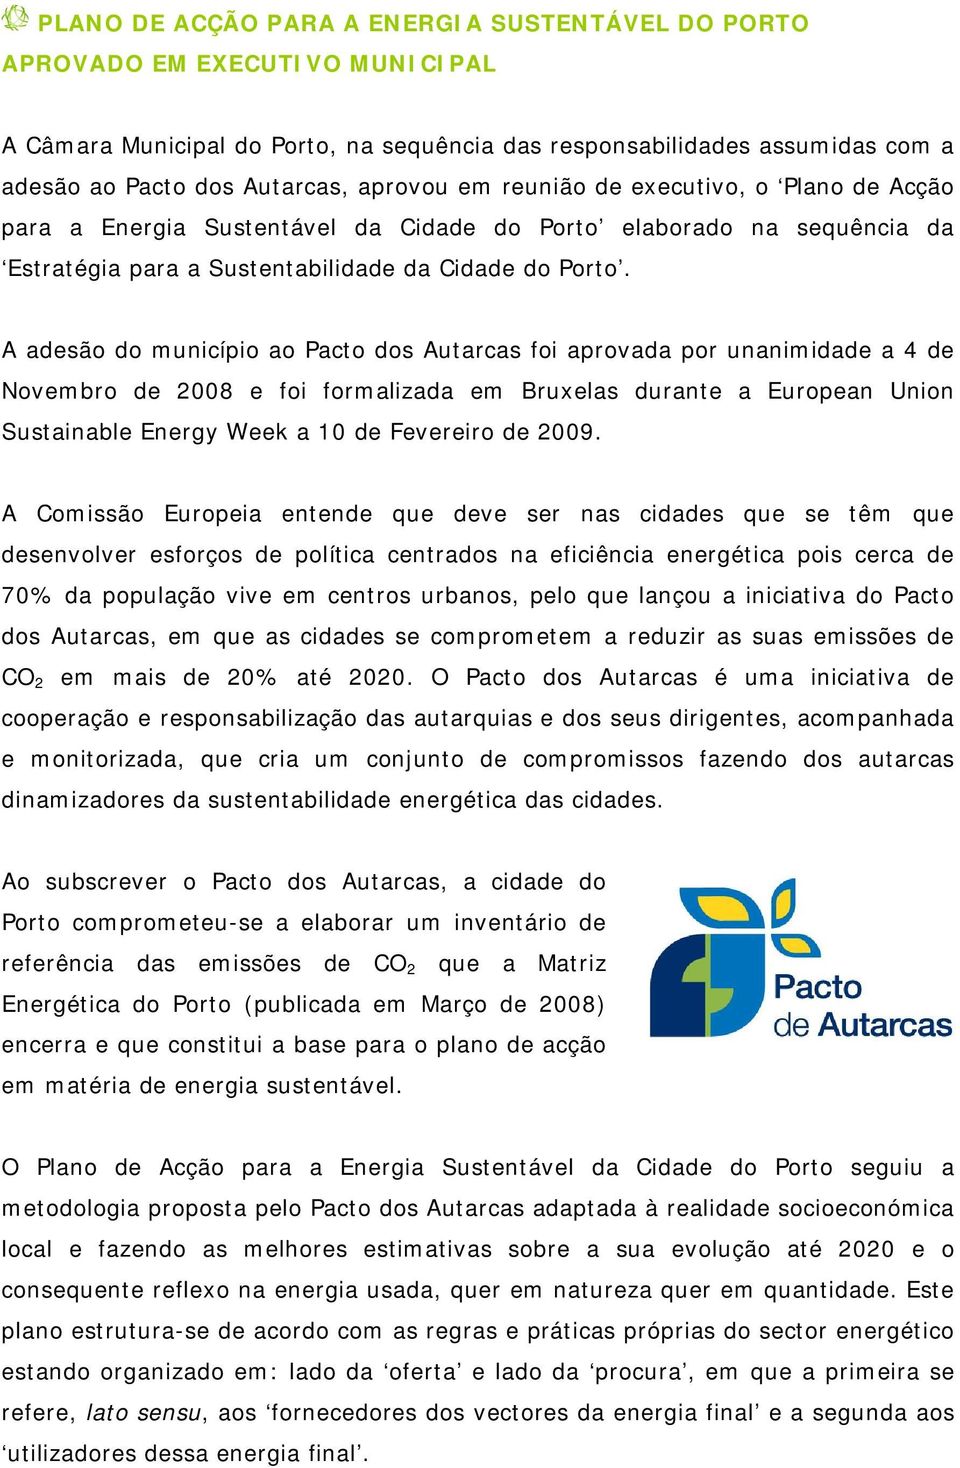 A adesão do município ao Pacto dos Autarcas foi aprovada por unanimidade a 4 de Novembro de 2008 e foi formalizada em Bruxelas durante a European Union Sustainable Energy Week a 10 de Fevereiro de